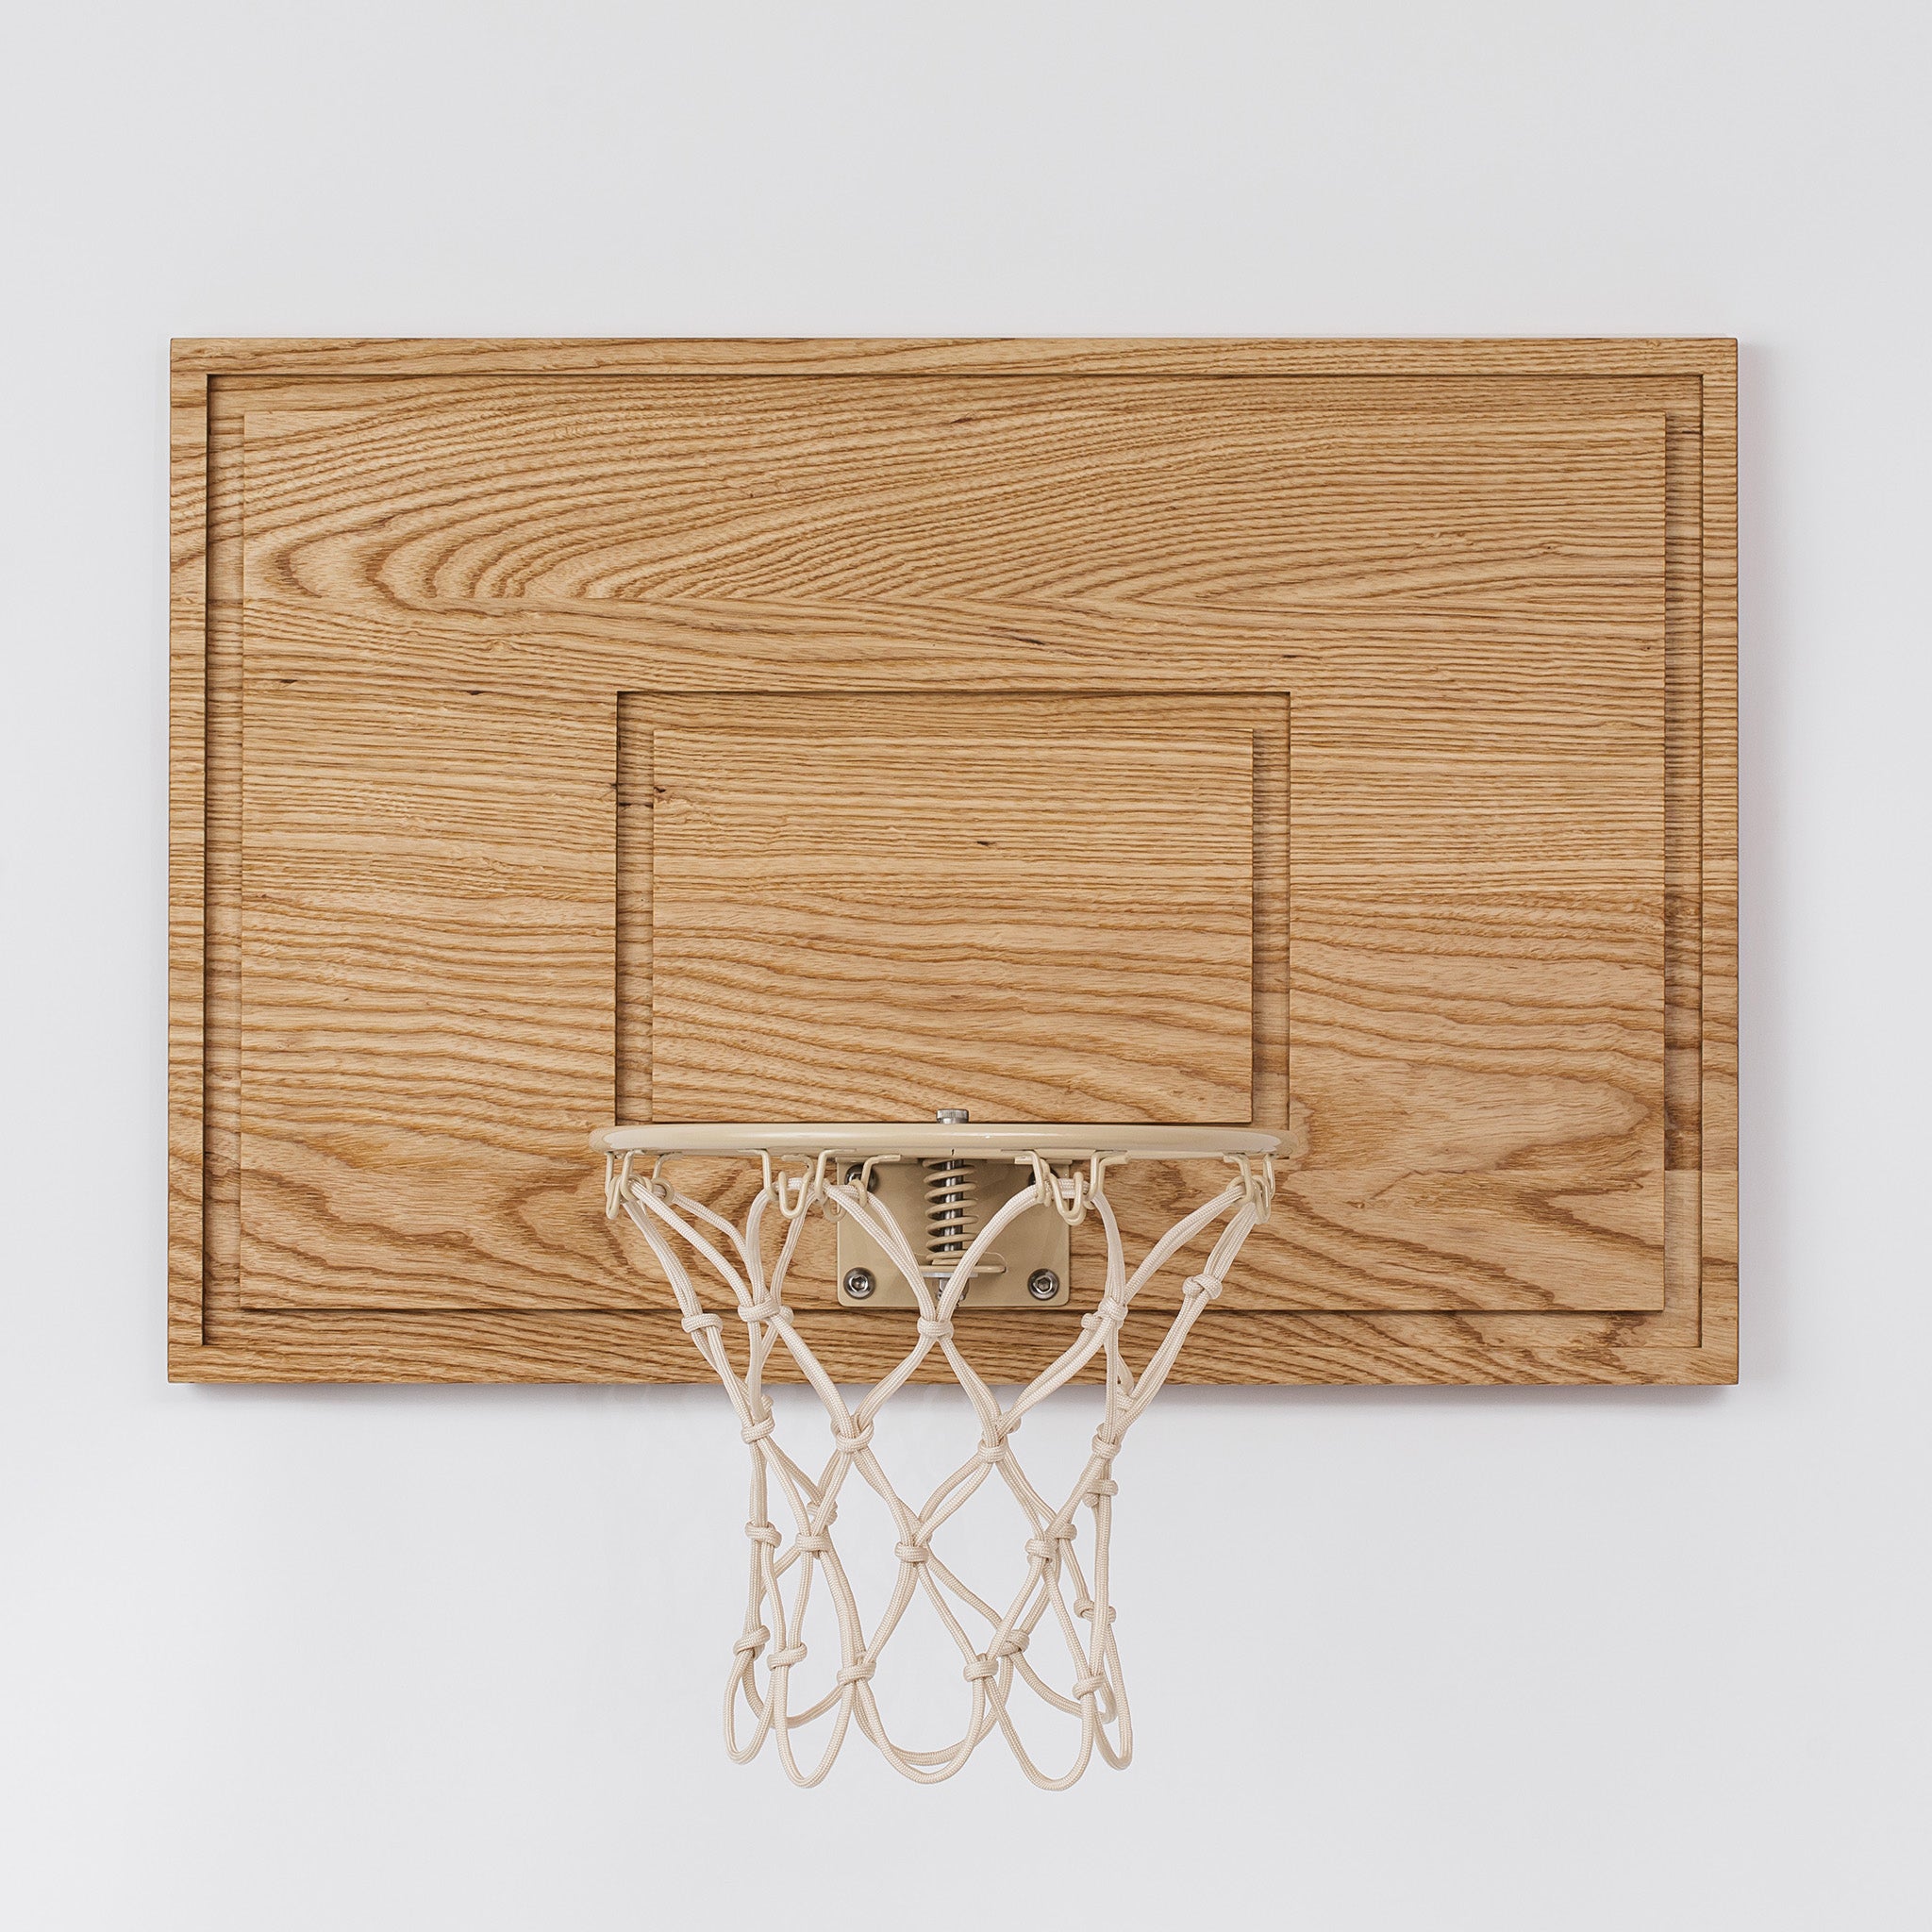  Luxury wall art wall mounted small basketball hoop -ash